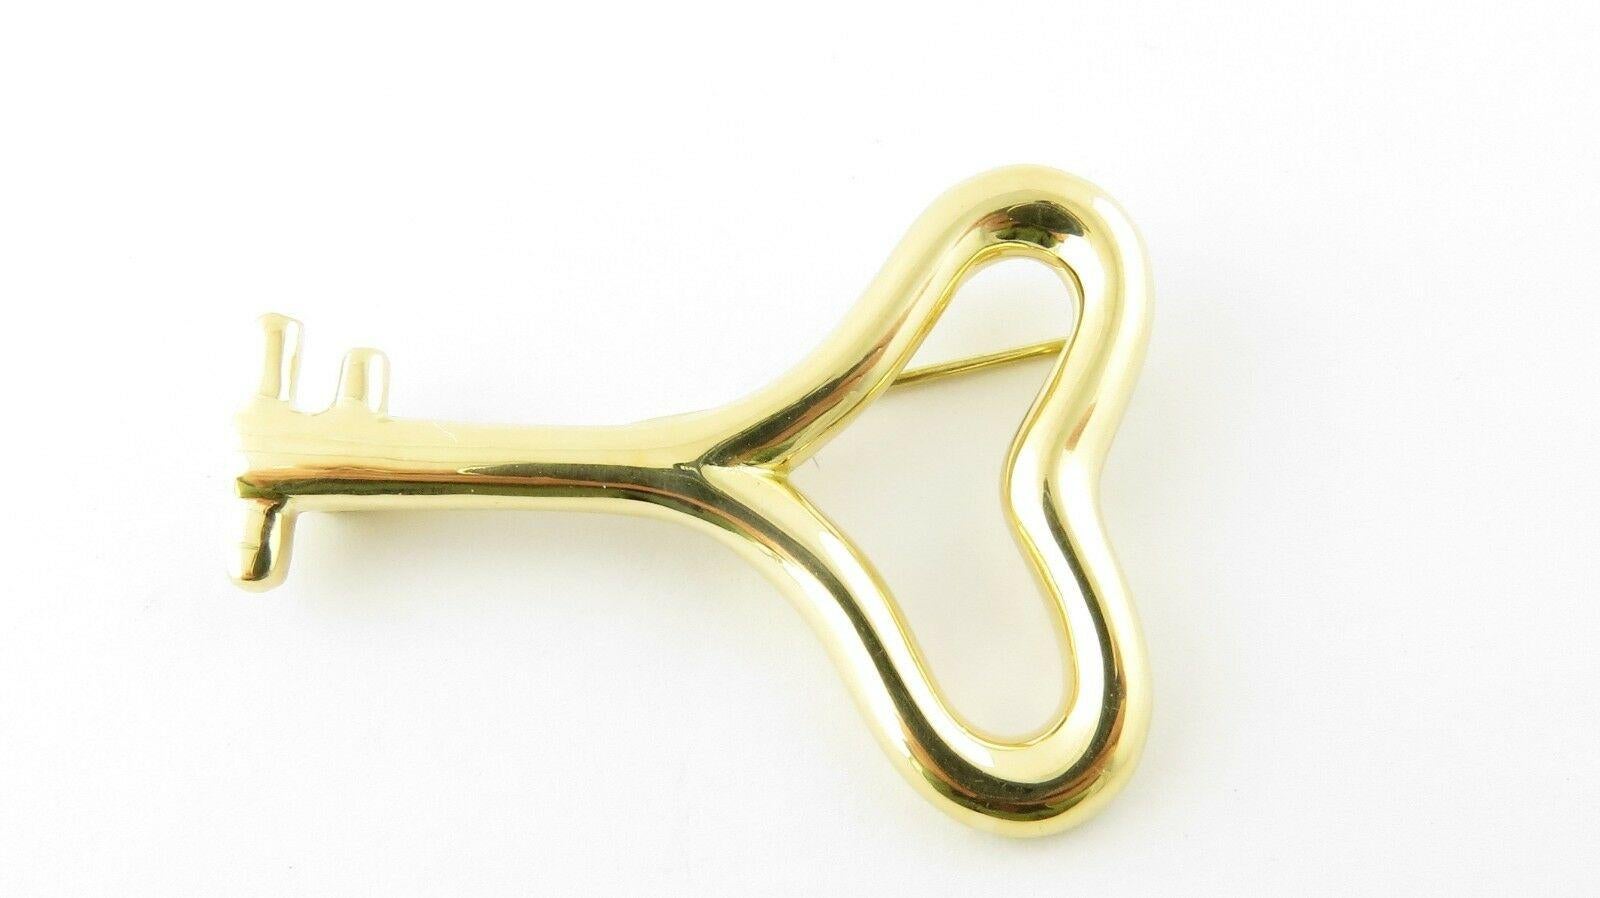 1993 Angela Cummings 18 Karat Yellow Gold Heart Key Pin Brooch In Good Condition For Sale In Washington Depot, CT